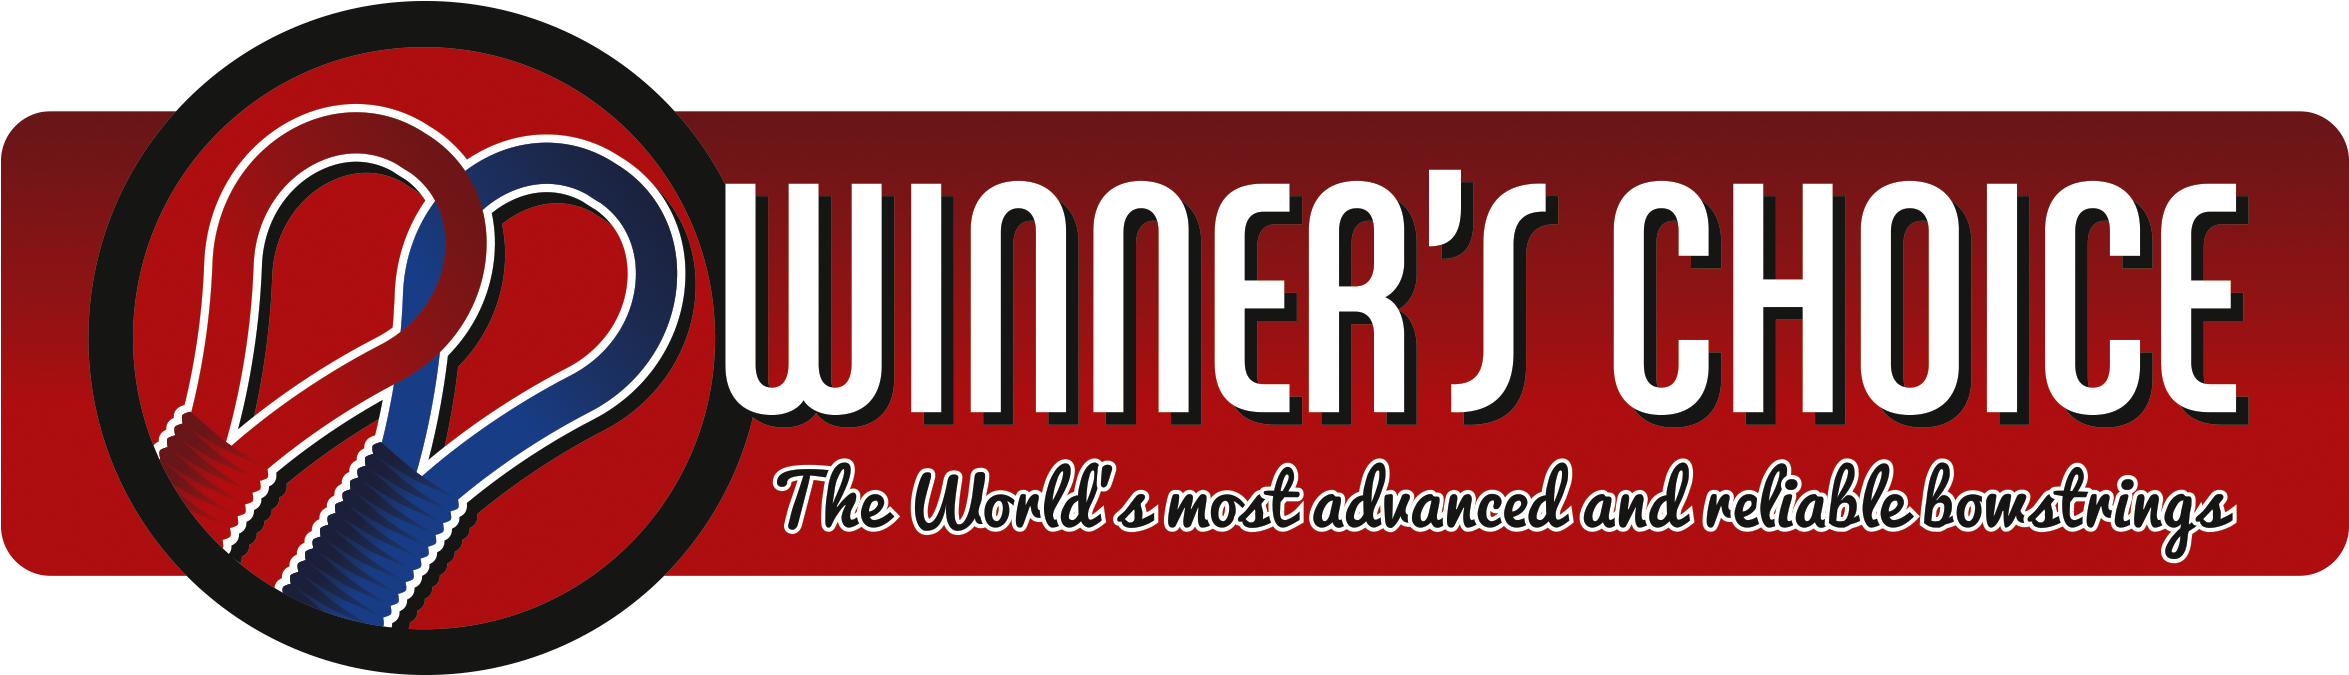 Winners Choice Bowstrings Logo PNG